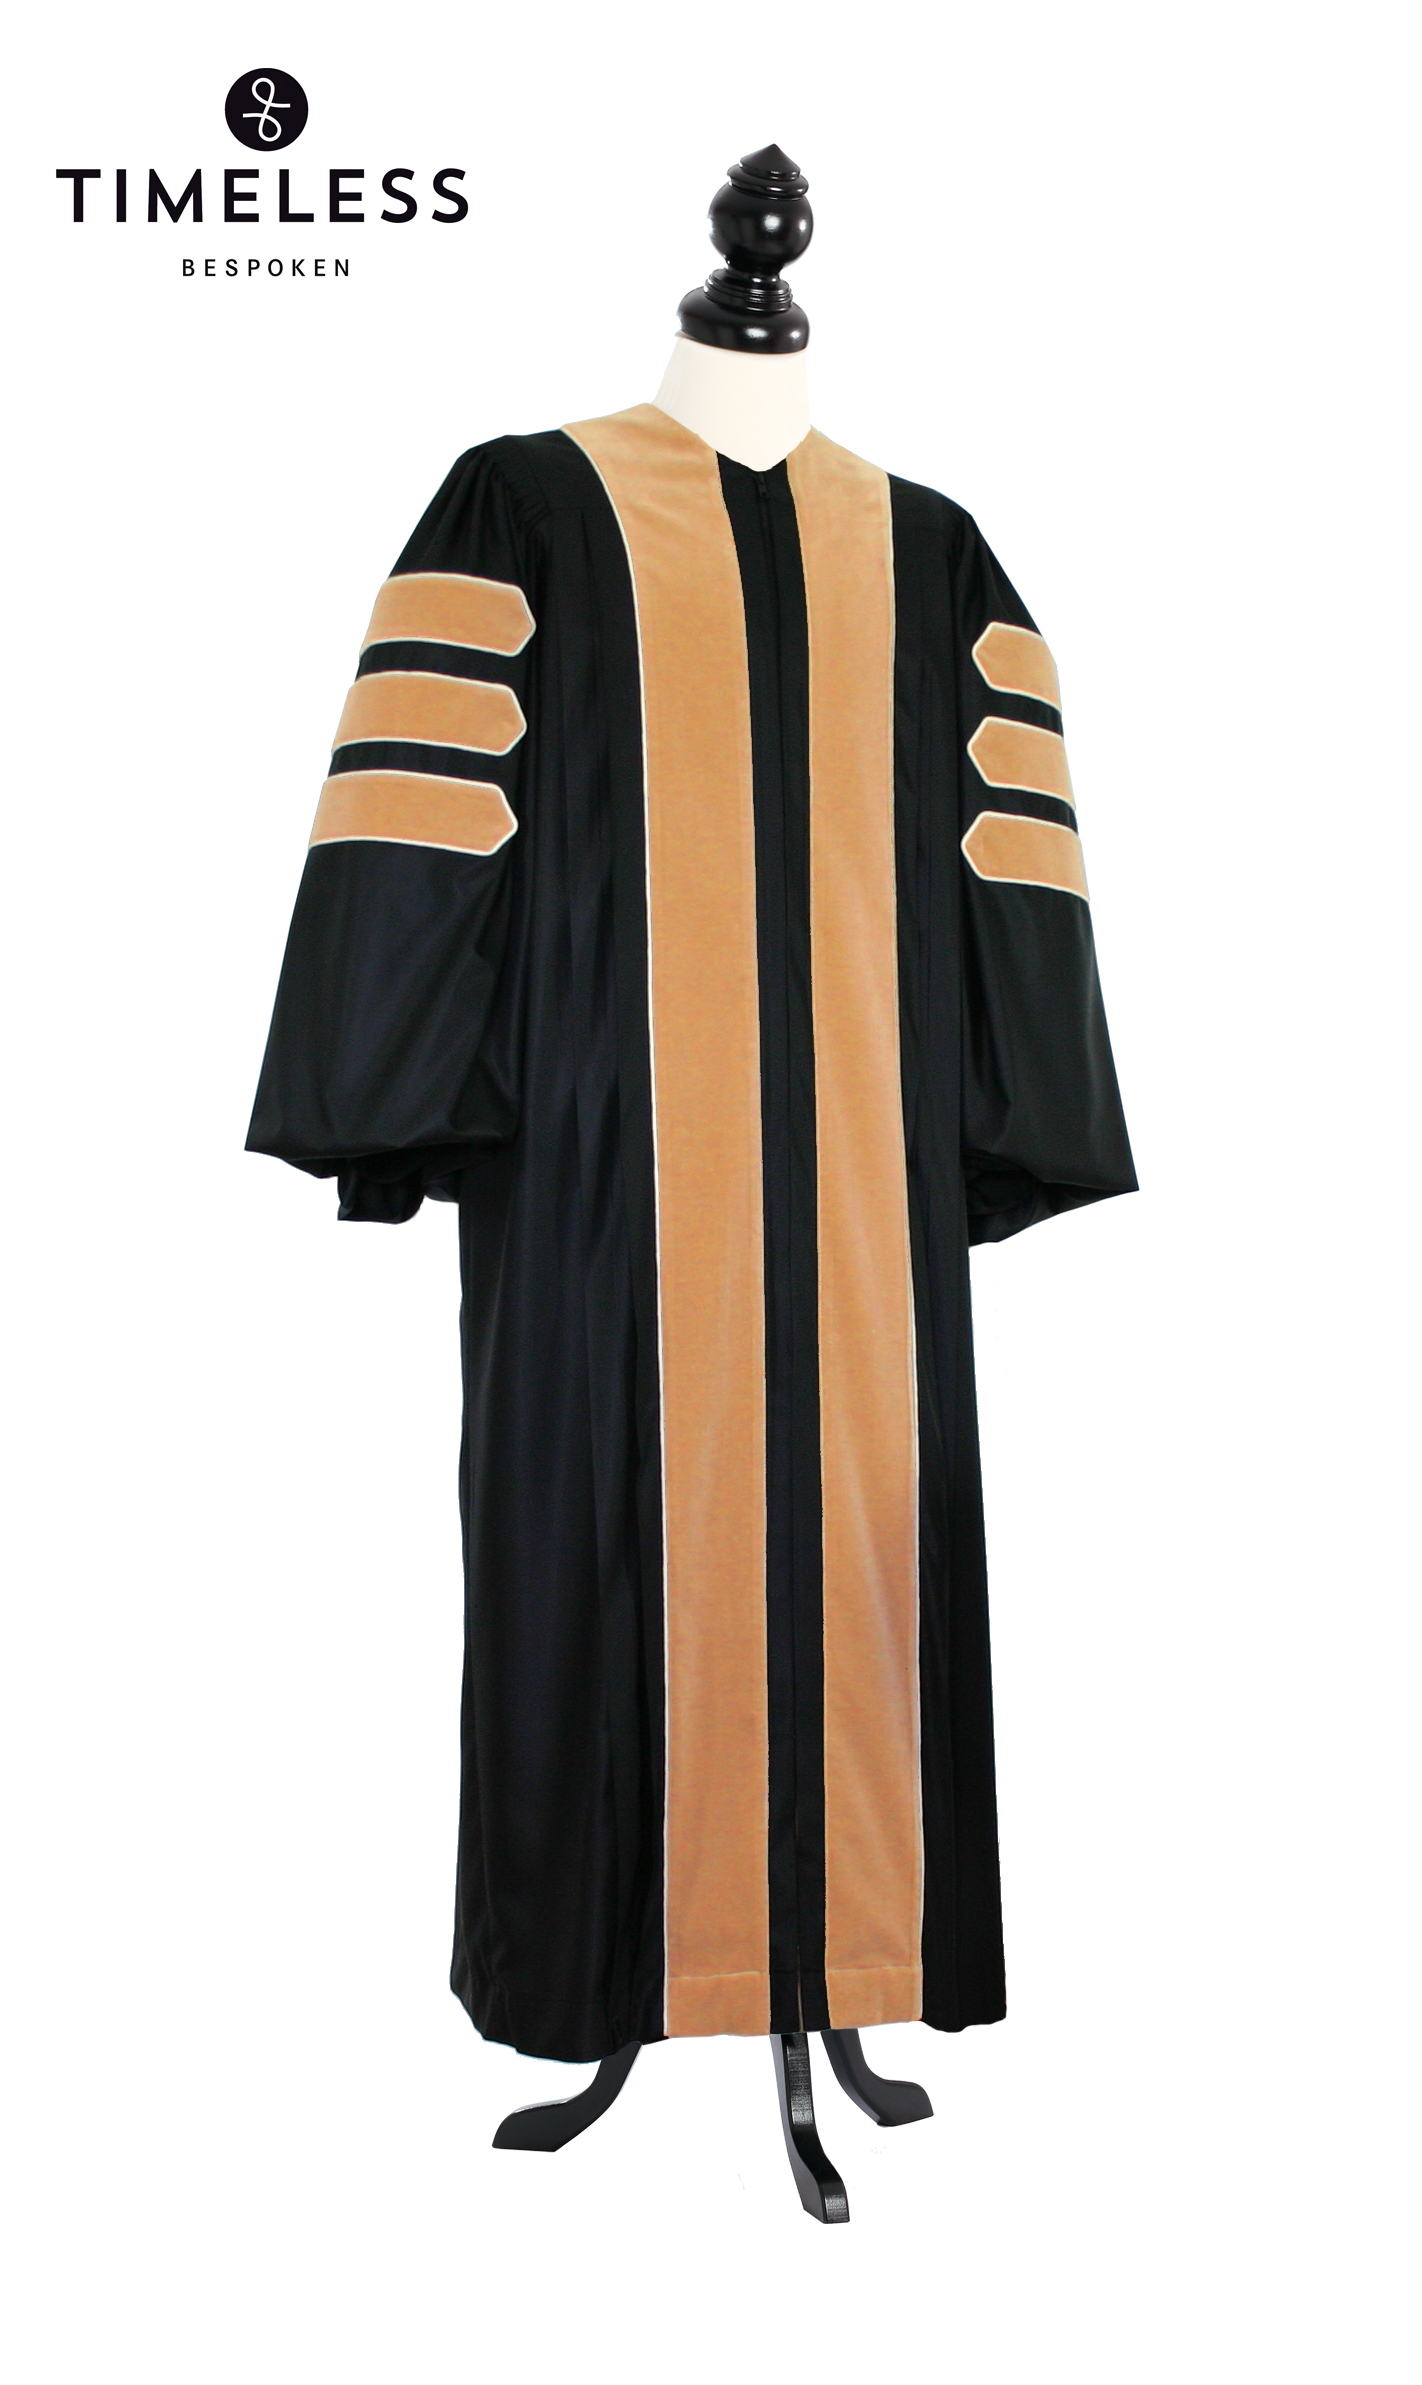 Doctor of Law Doctoral Gown - Academic Regalia – Graduation Attire